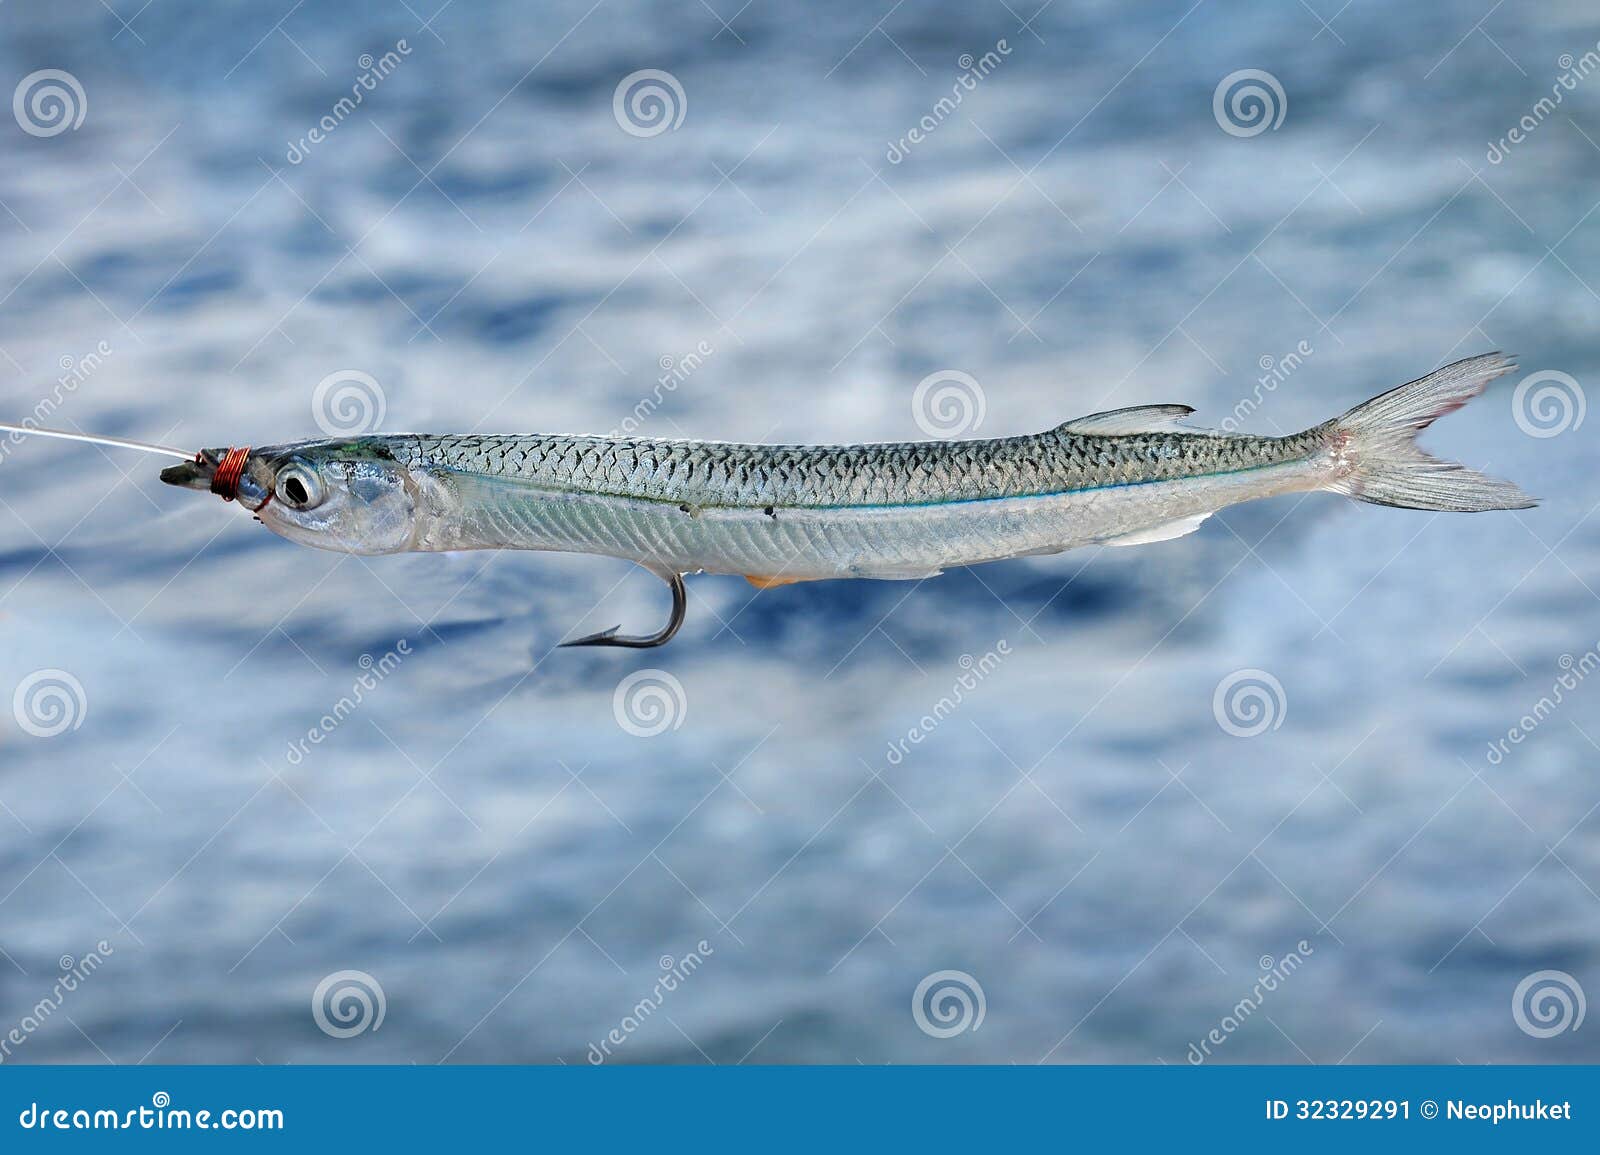 Real fish bait stock image. Image of decoy, salmon, move - 32329291